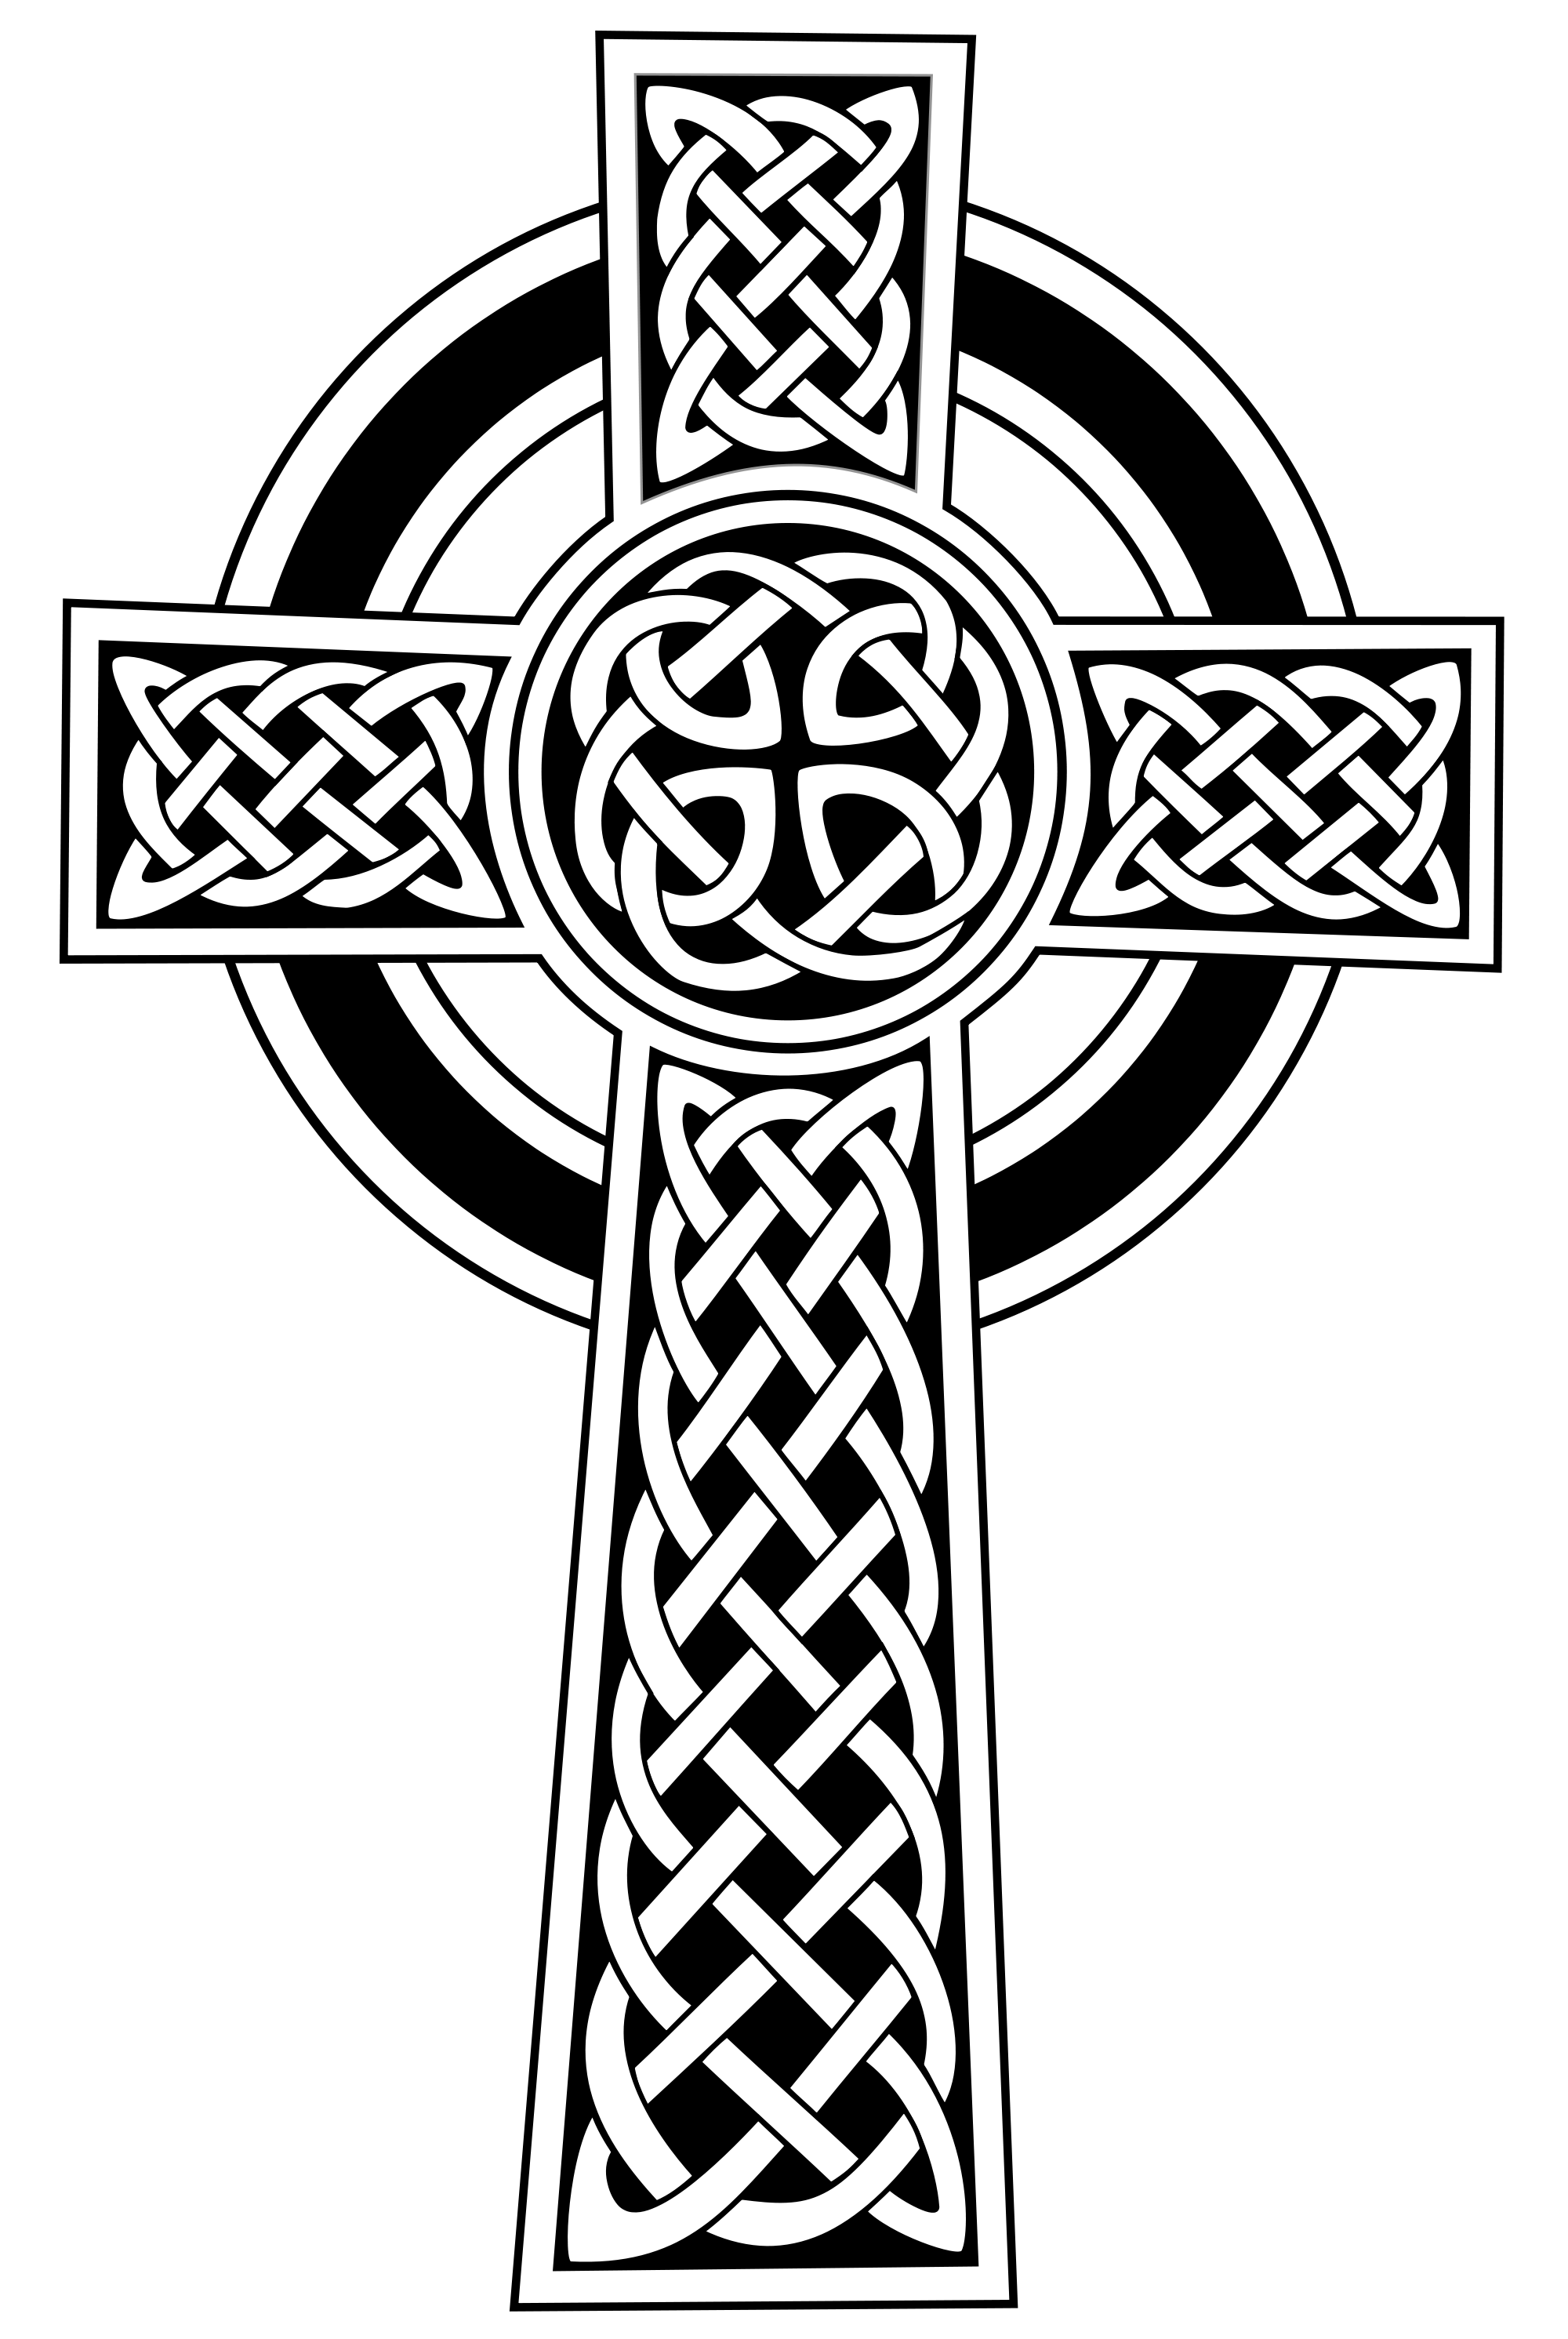 Celts wikipedia the free. Crucifix clipart thin cross